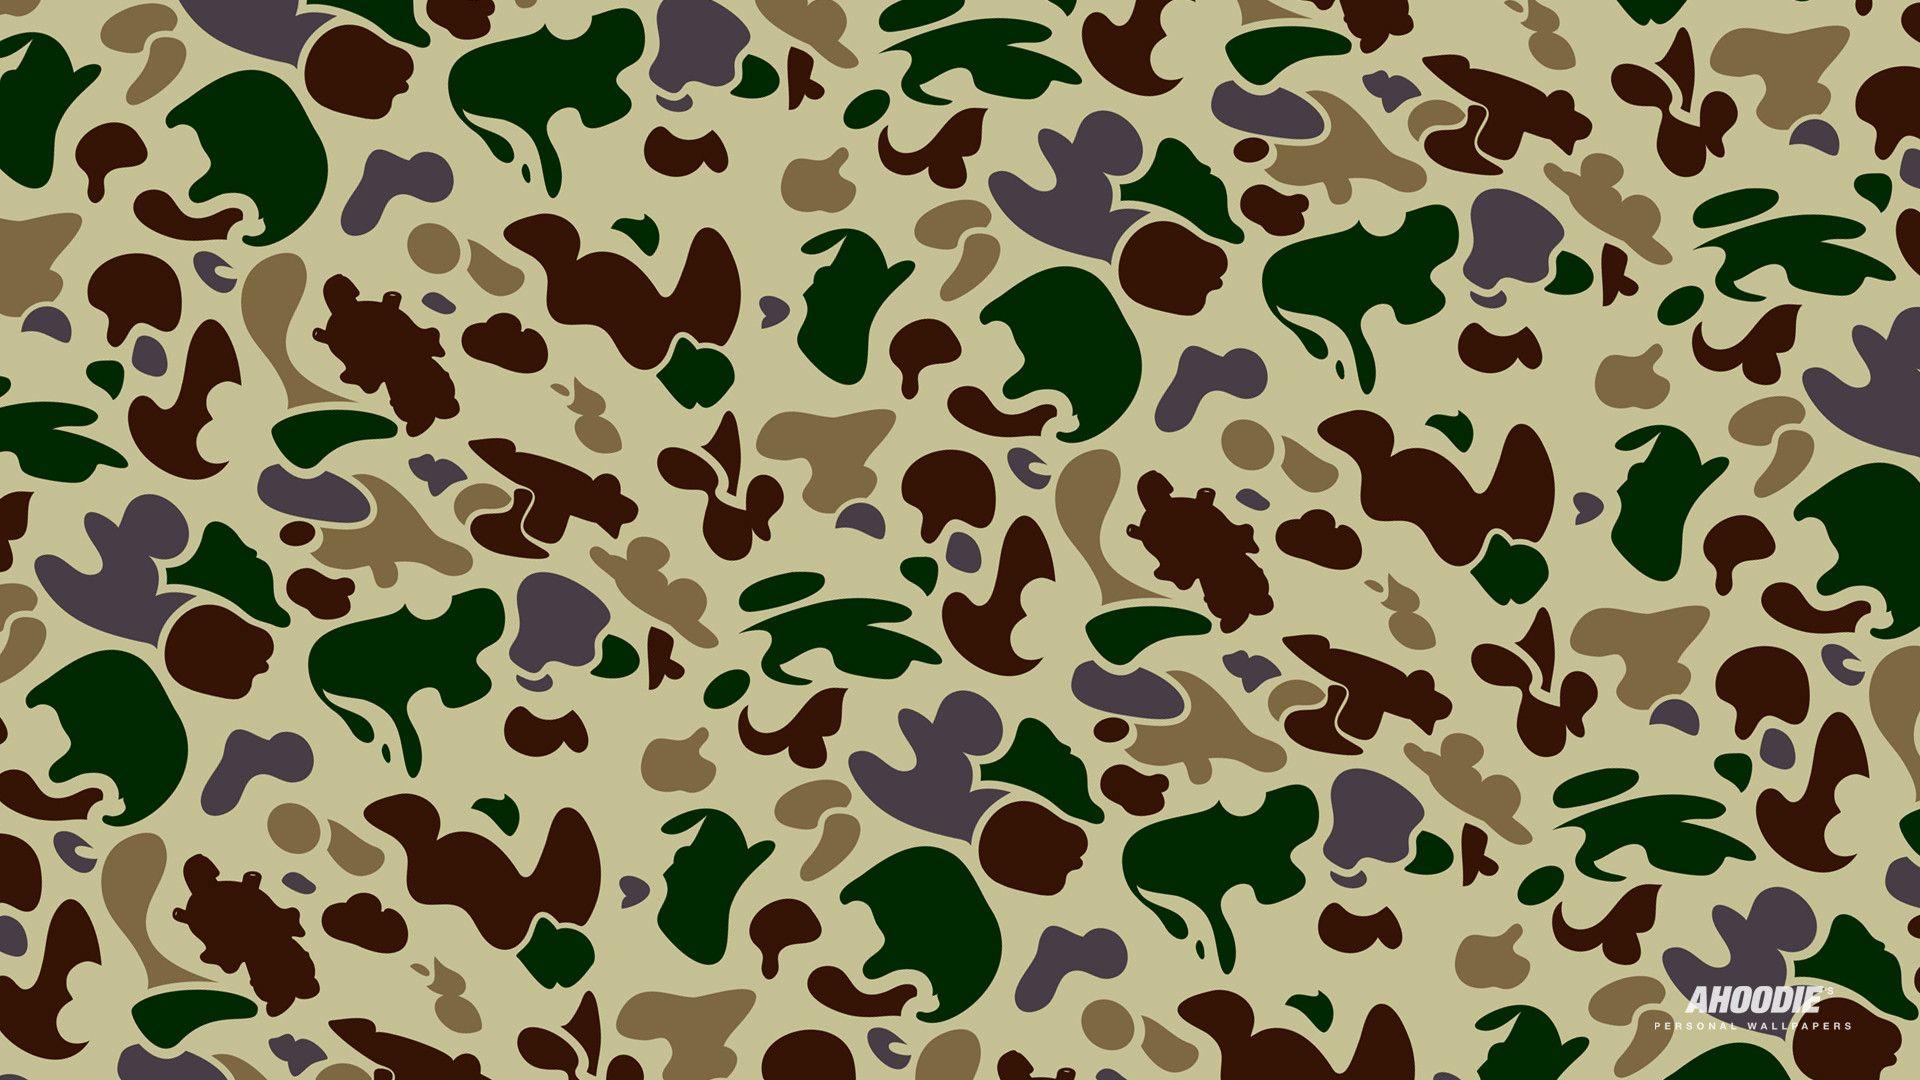 Download Supreme Camouflage Wallpaper Wallpaper